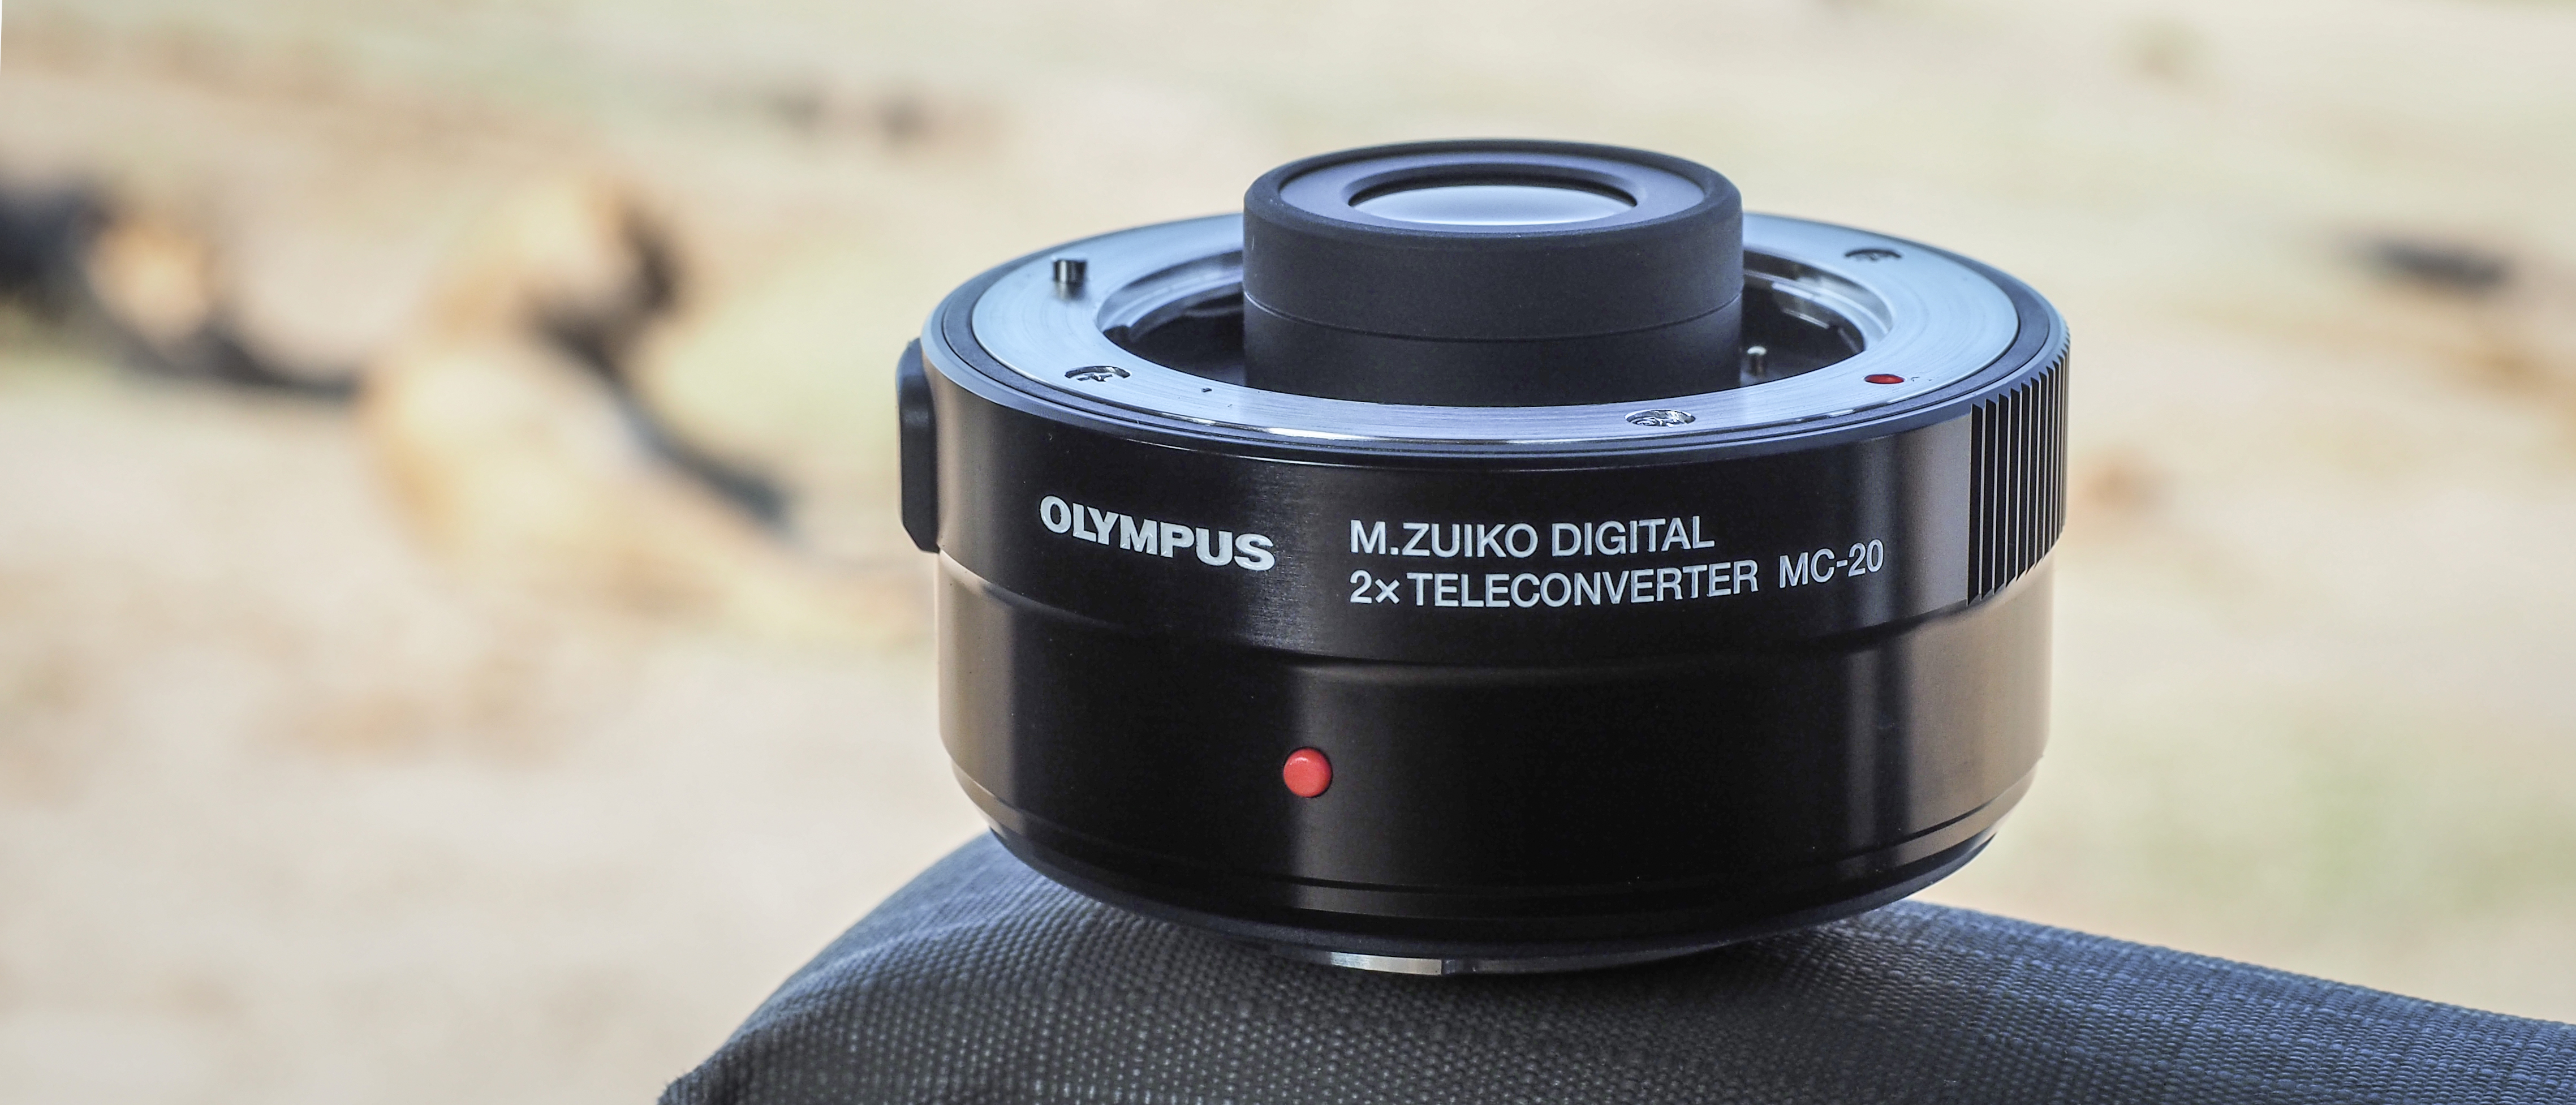 Olympus M.Zuiko Digital 2x Teleconverter MC-20 review | Digital